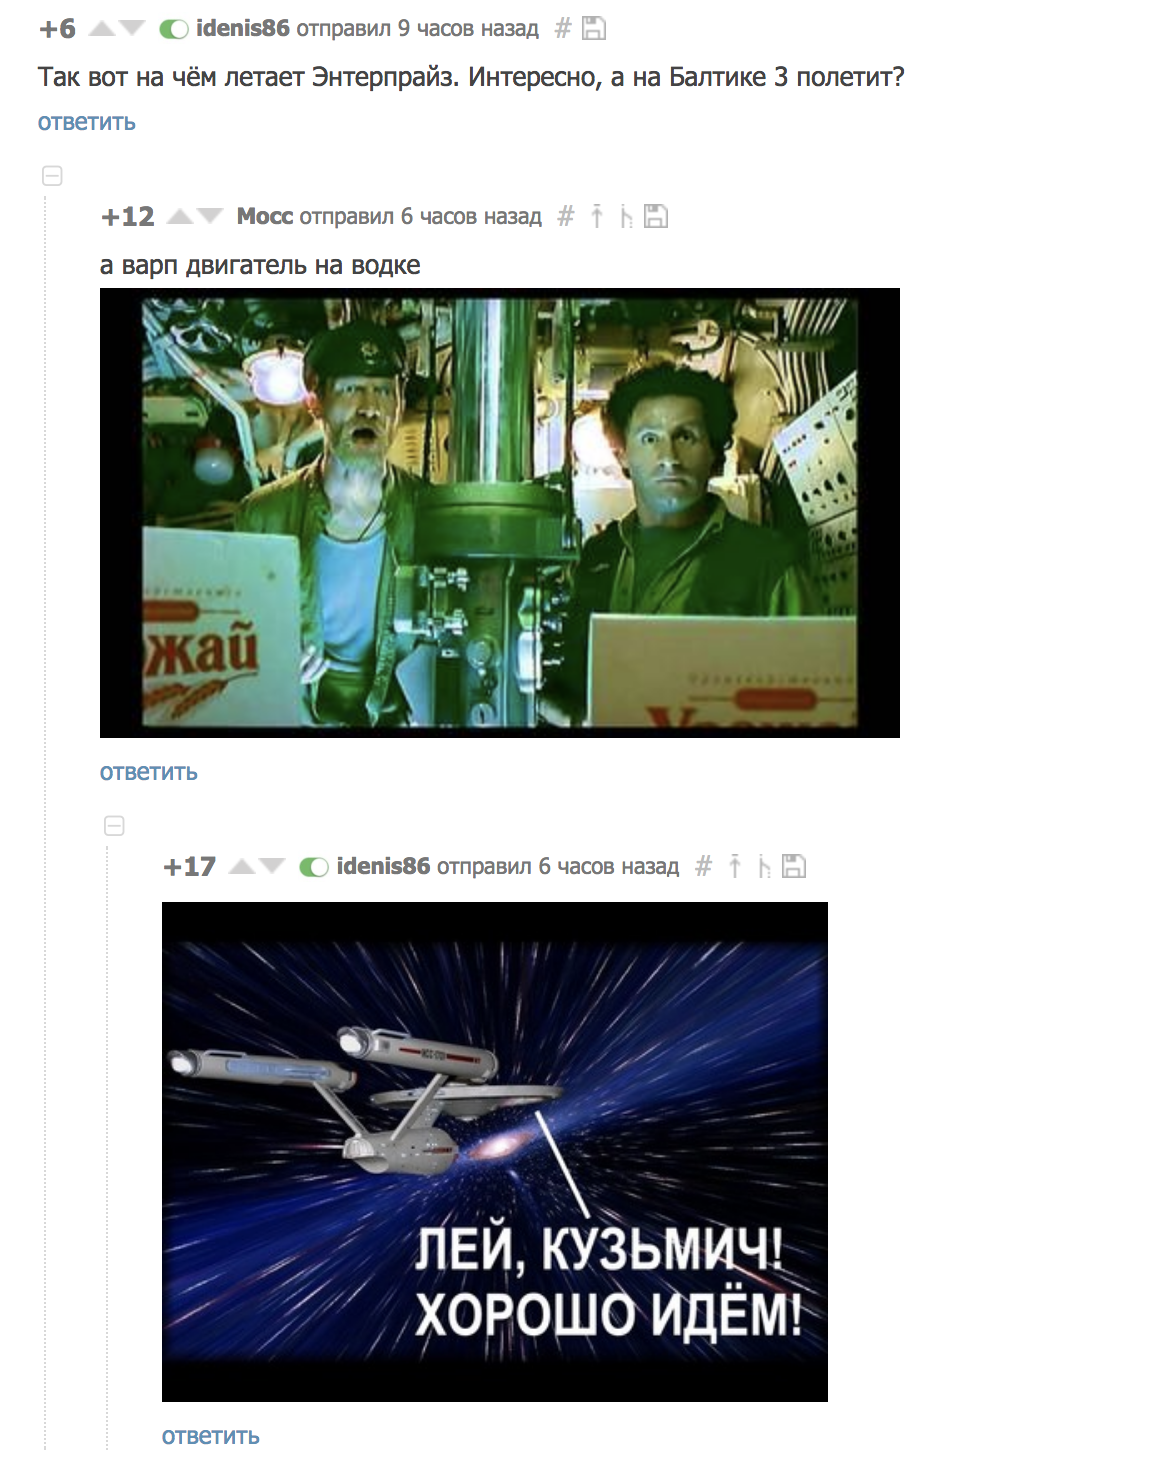 New type of fuel - Vodka, Russians, Star trek, Comments, Screenshot, Comments on Peekaboo